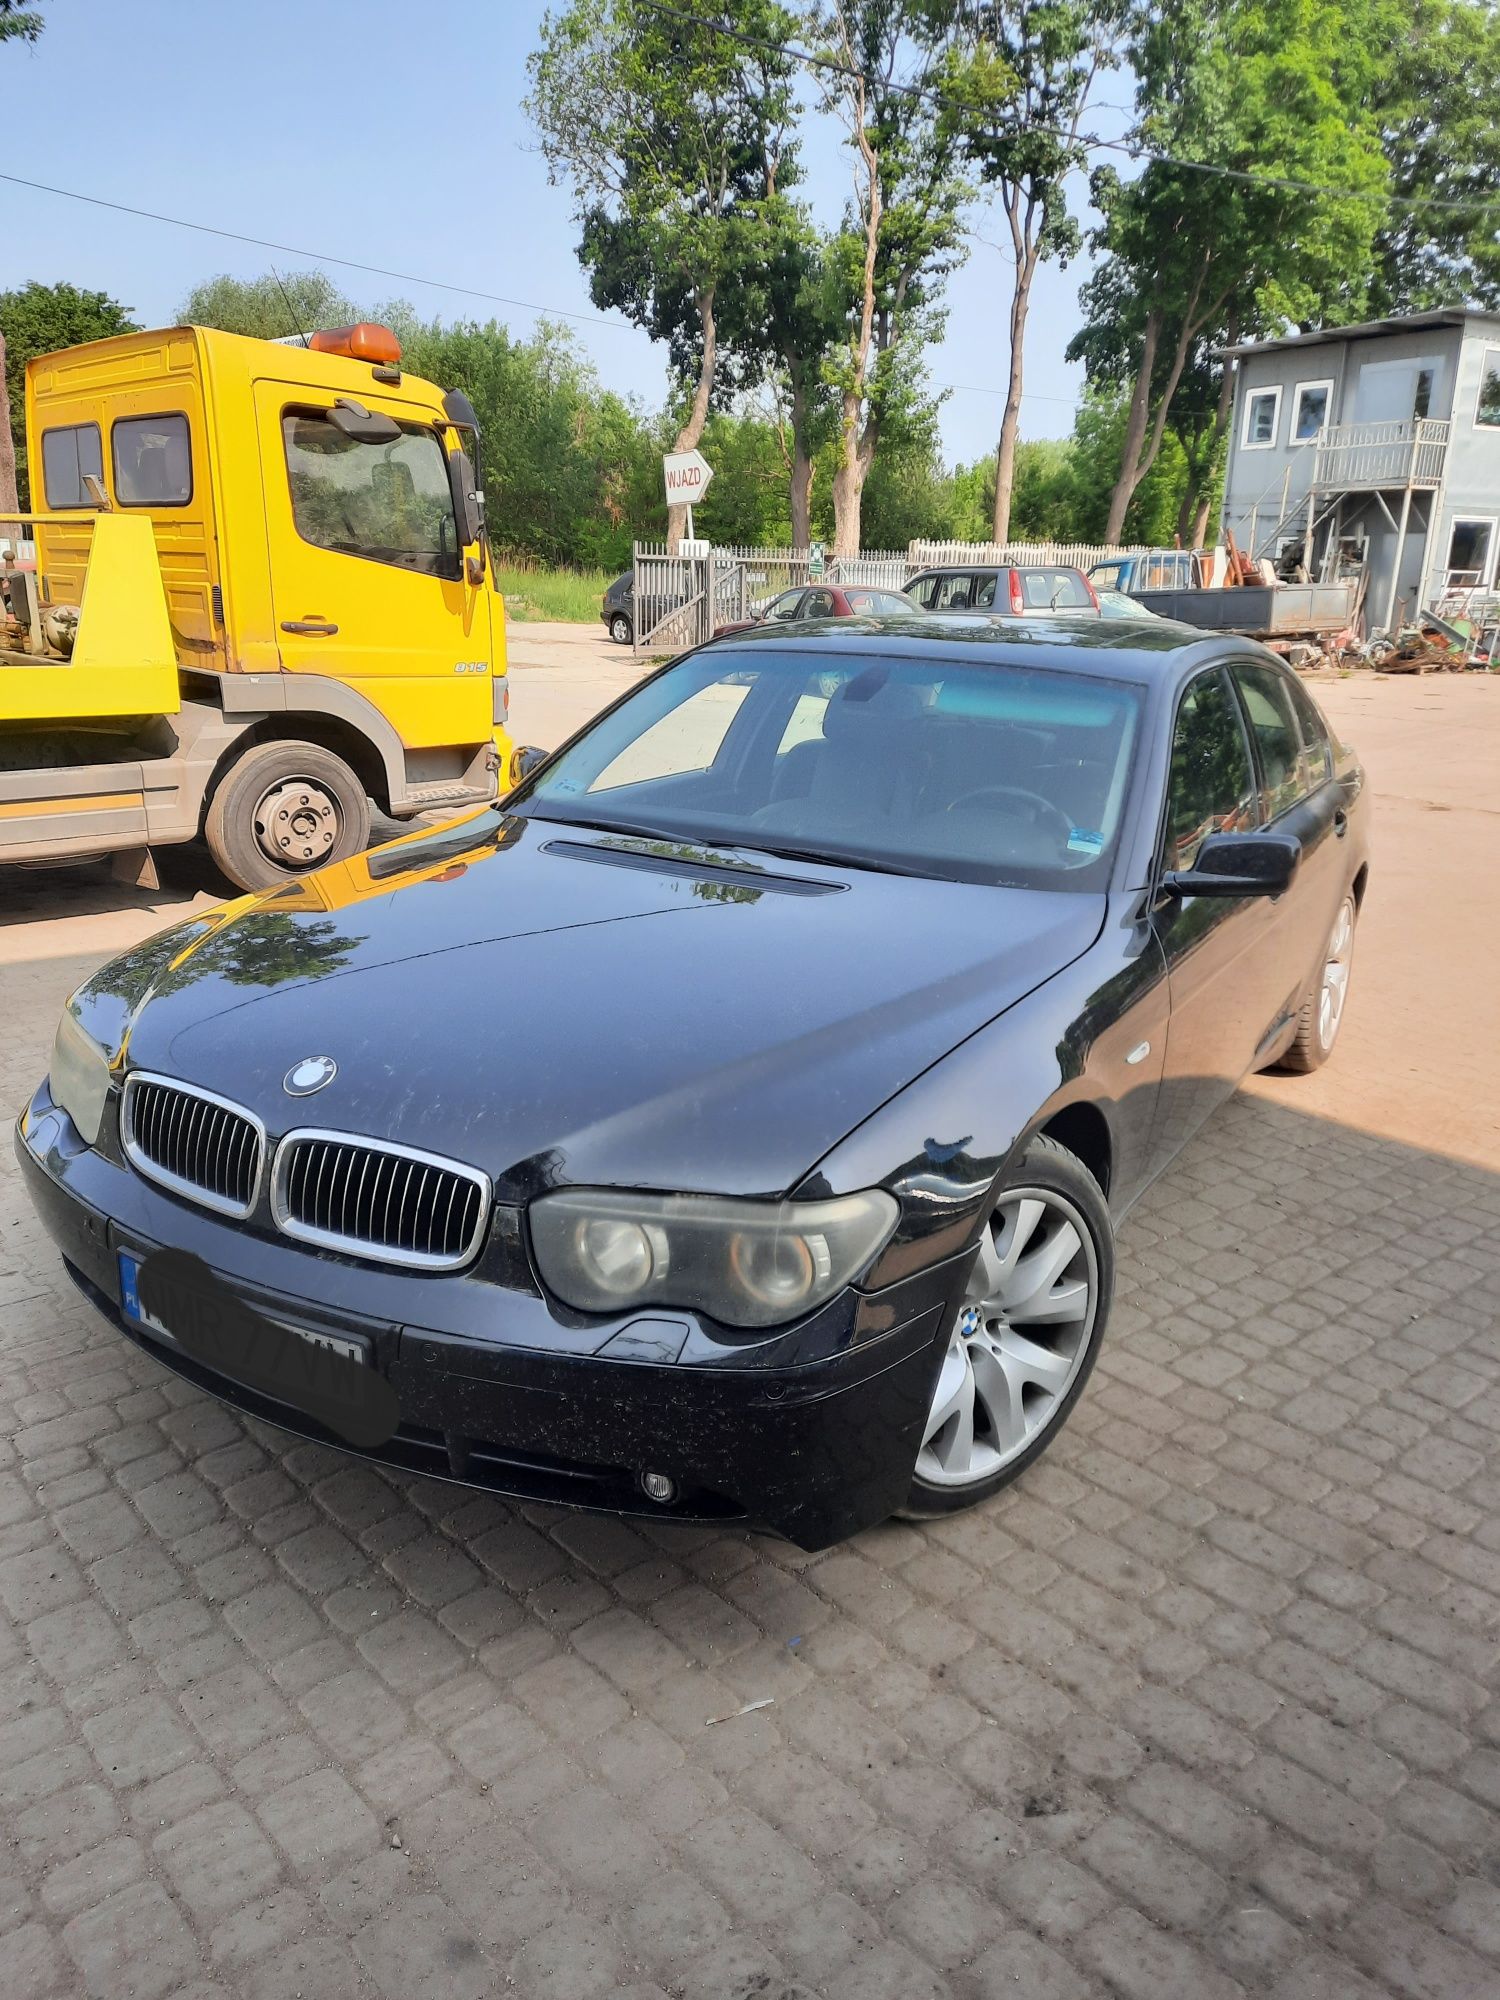 BMW 730D, 2004 rok, 2993,00cm3